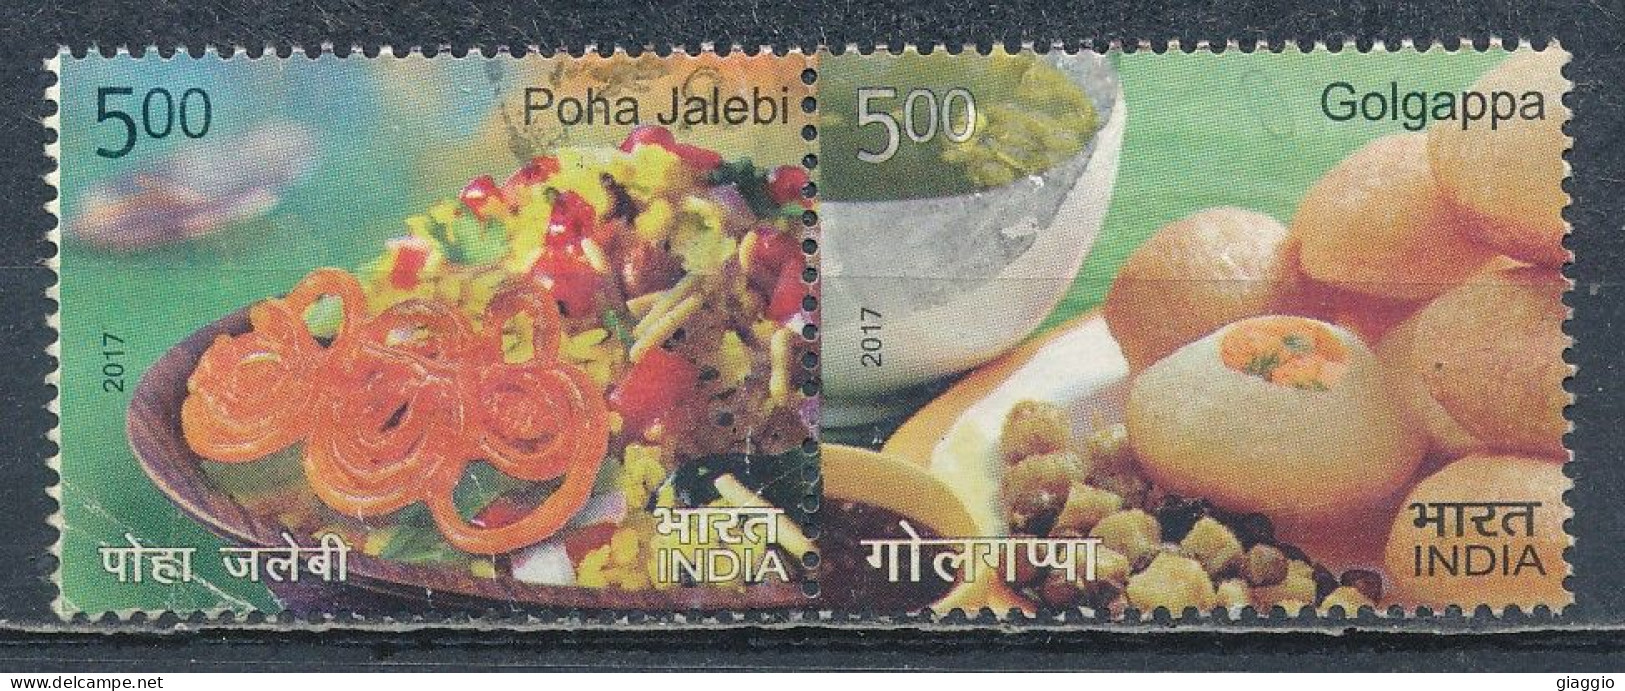 °°° INDIA 2017 - MI 3239/40 °°° - Used Stamps